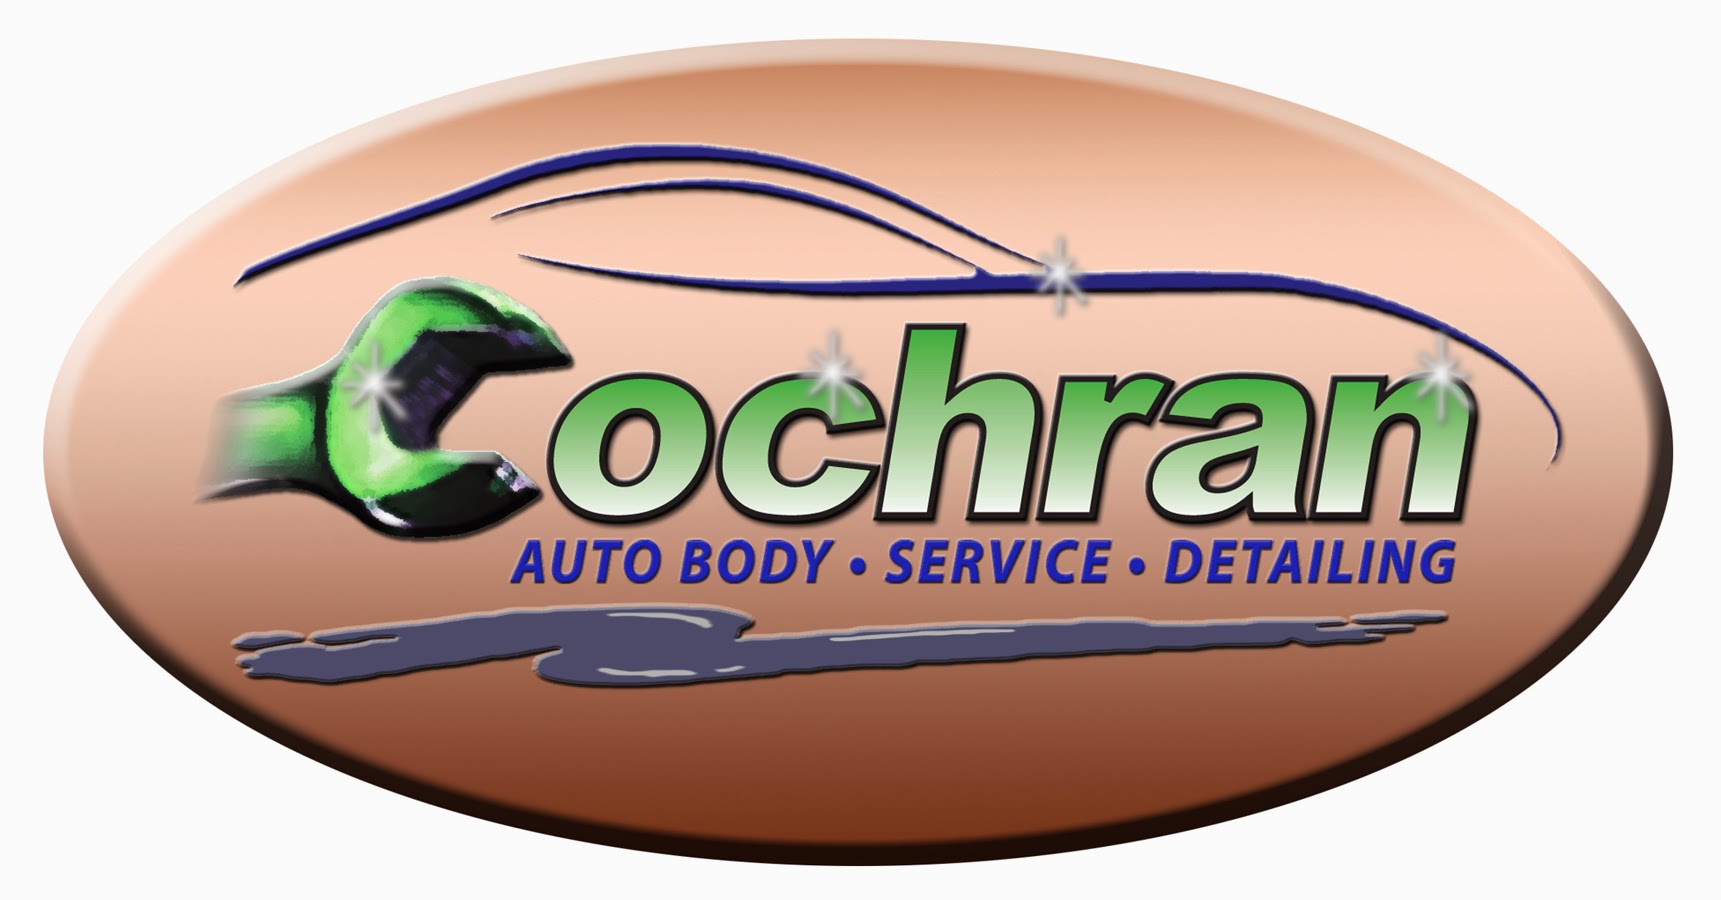 Cochran Auto Body / Services & Detailing